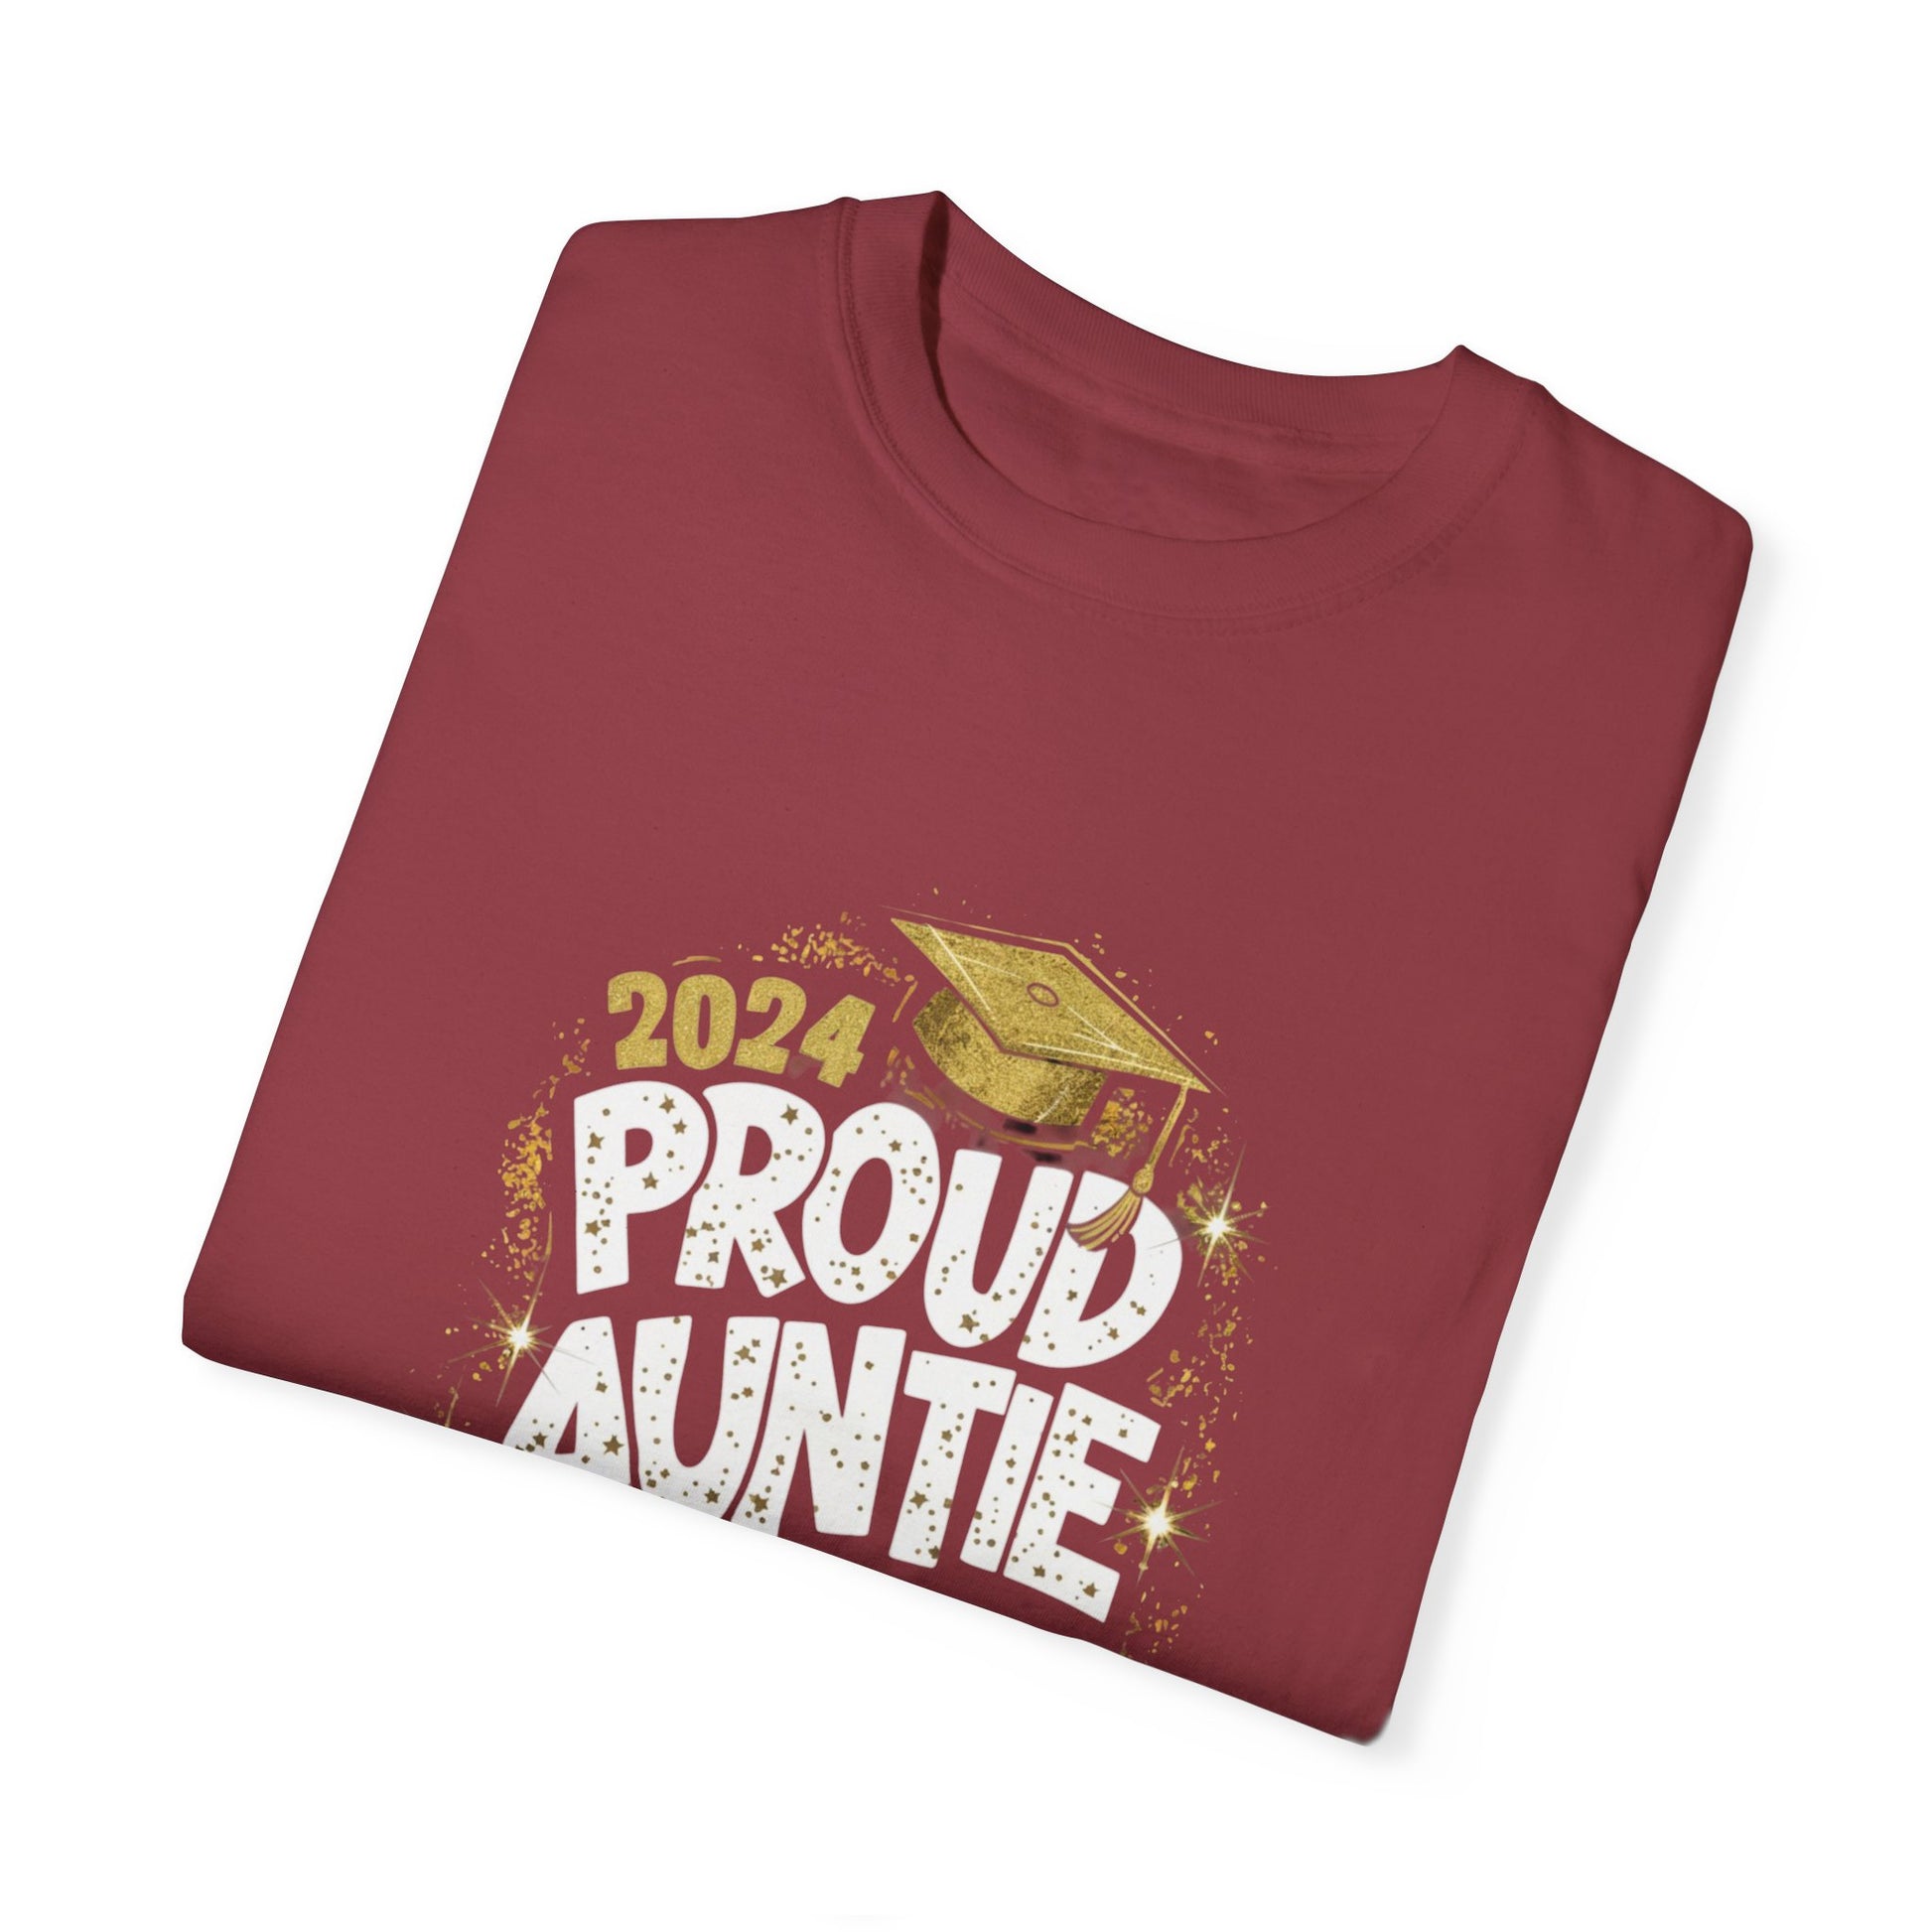 Proud Auntie of a 2024 Graduate Unisex Garment-dyed T-shirt Cotton Funny Humorous Graphic Soft Premium Unisex Men Women Chili T-shirt Birthday Gift-35